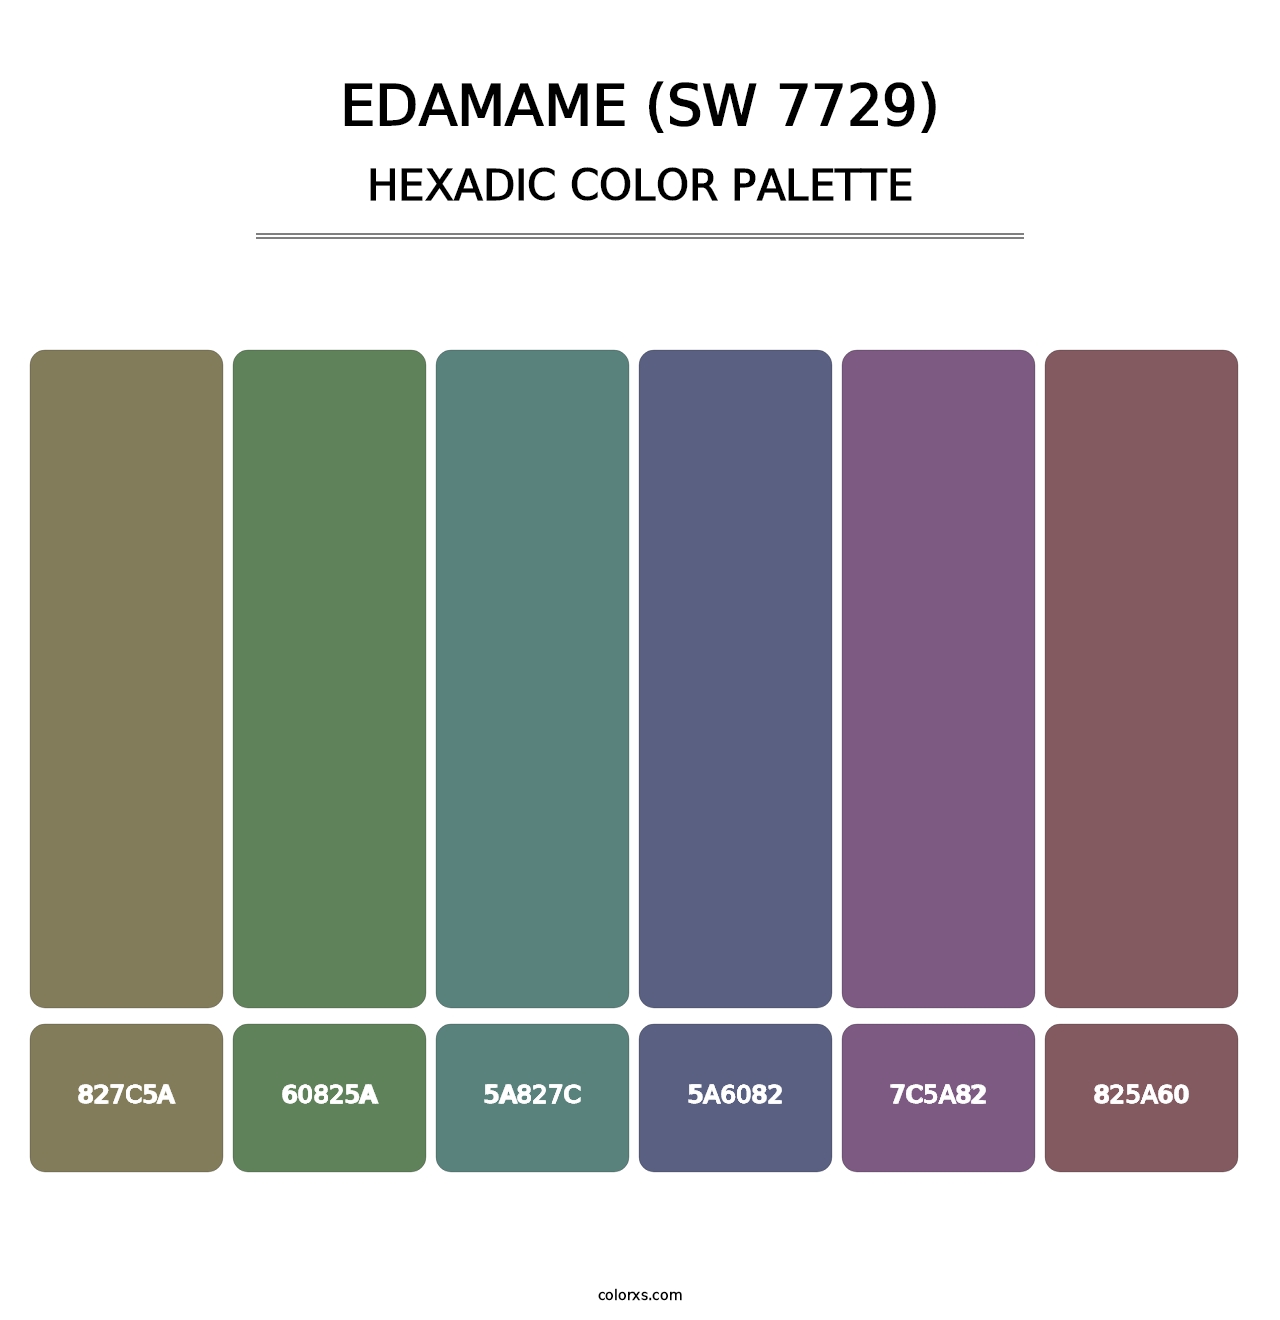 Edamame (SW 7729) - Hexadic Color Palette